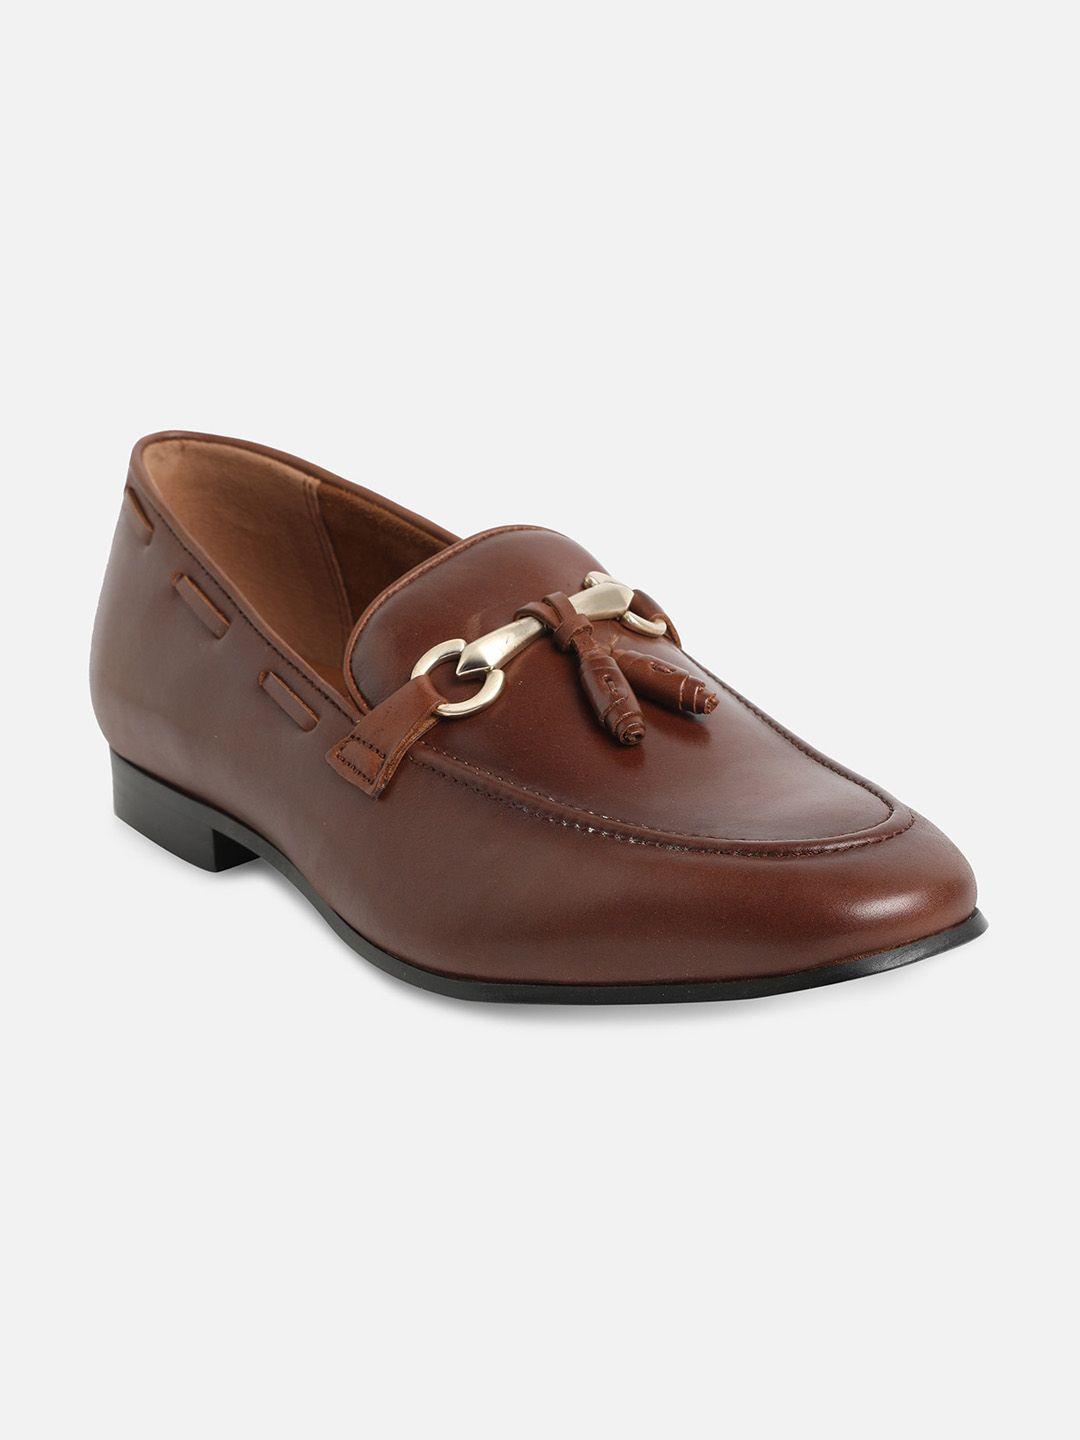 ALDO Men Brown Leather Solid Boat Shoes